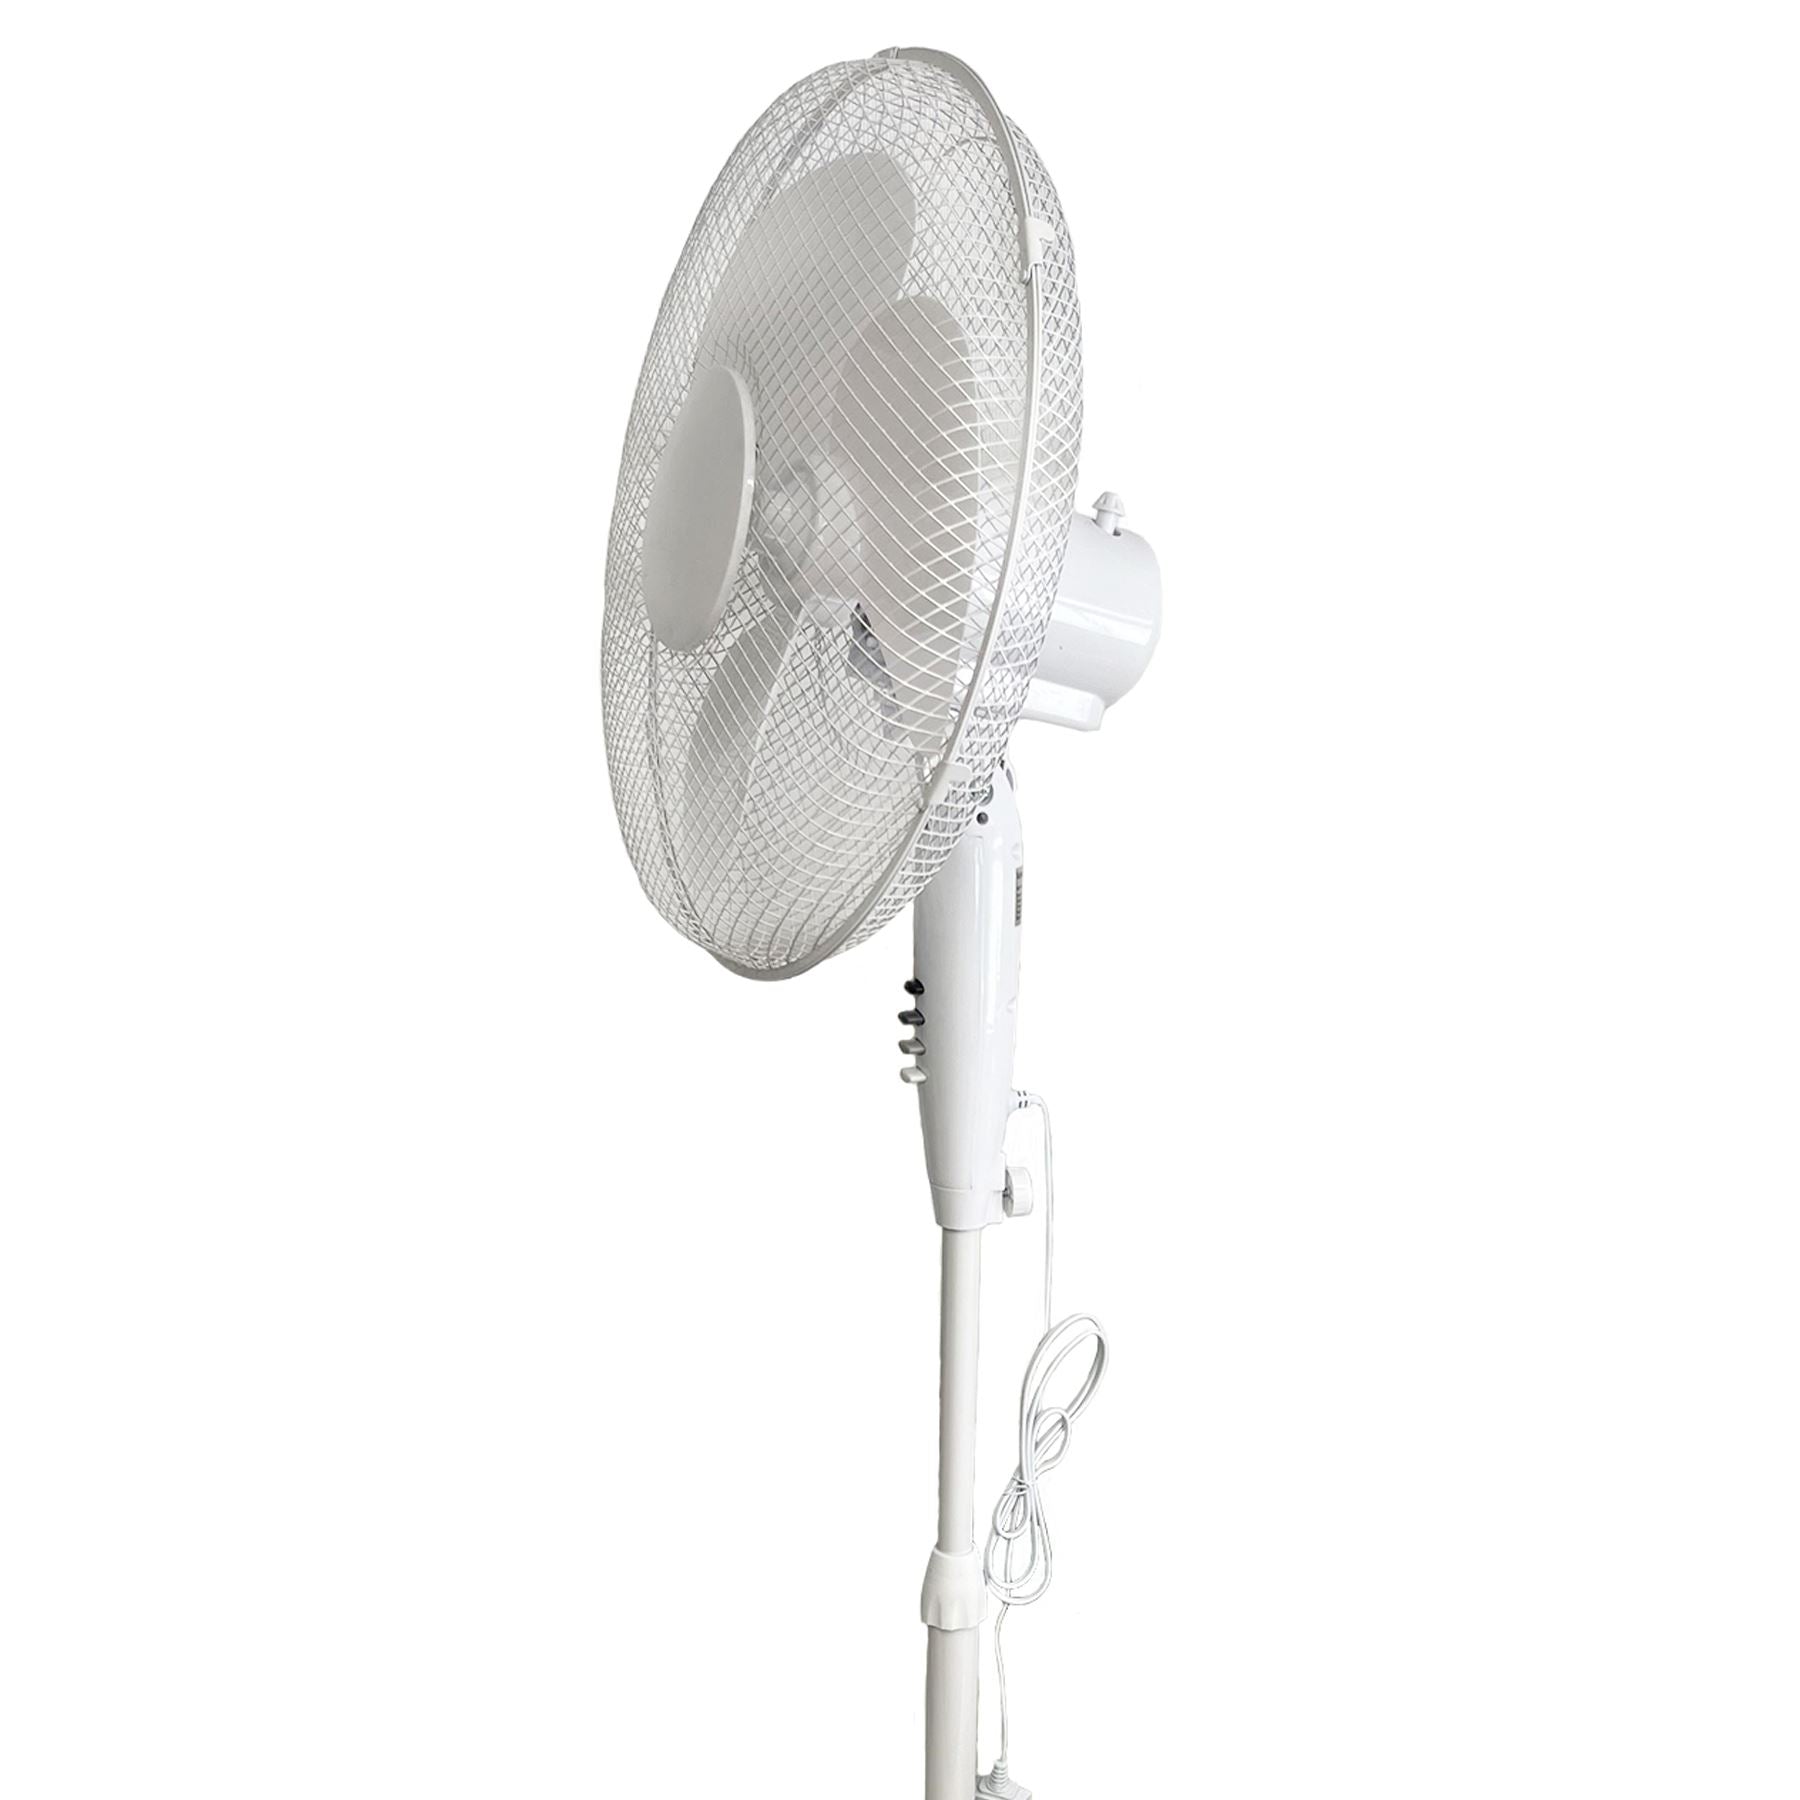 16” Pedestal Free Standing Cooling Fan Oscillating Tilting Head 3 Speed White